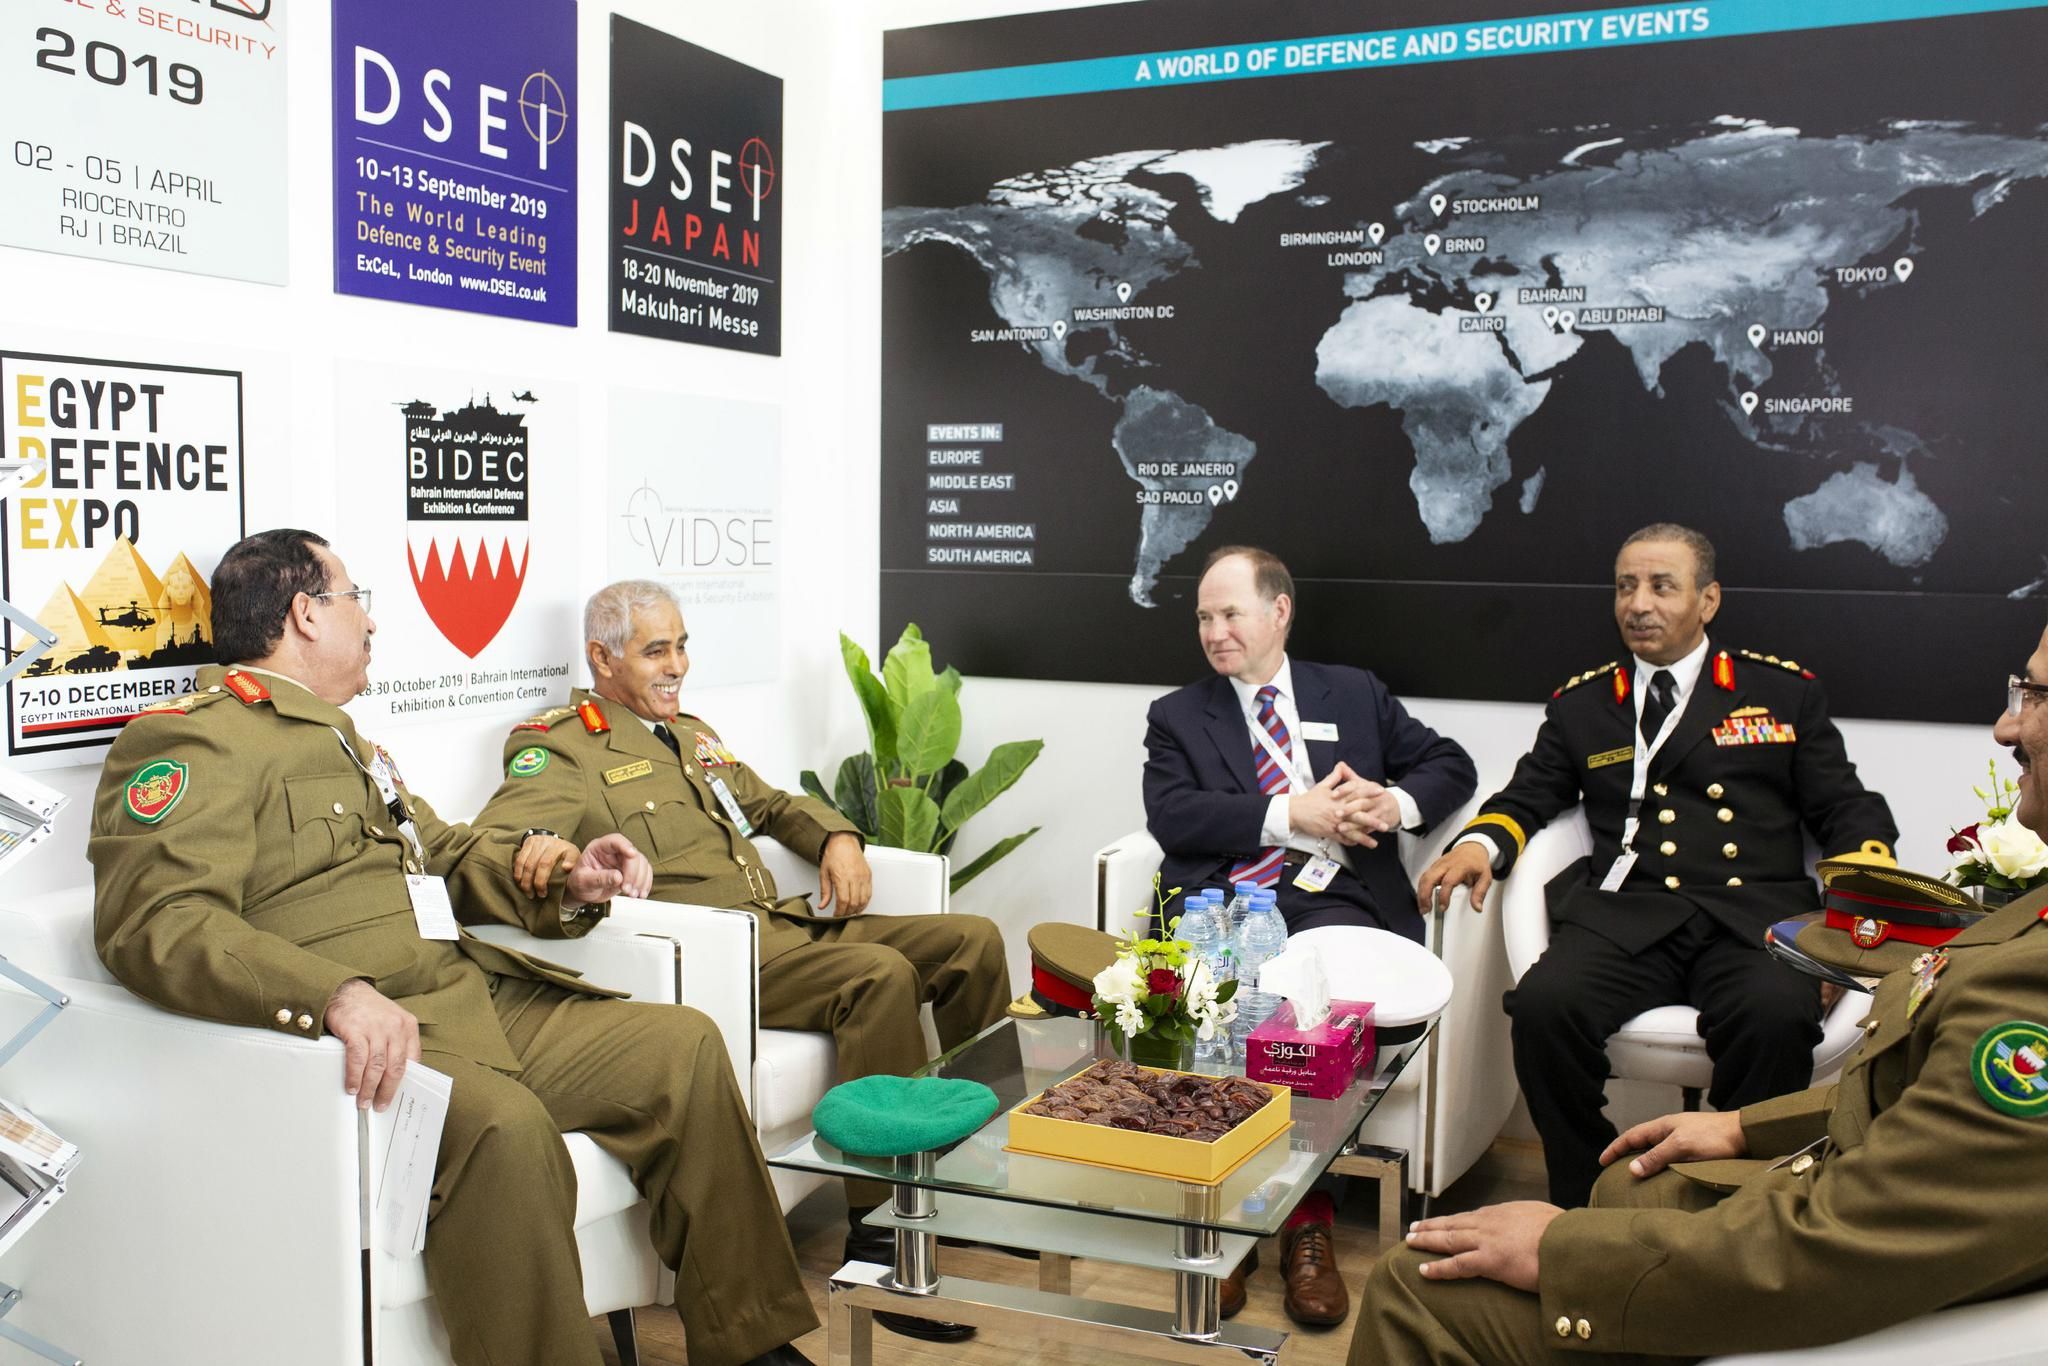 Bahrain Chief of Staff visits the BIDEC stand at IDEX